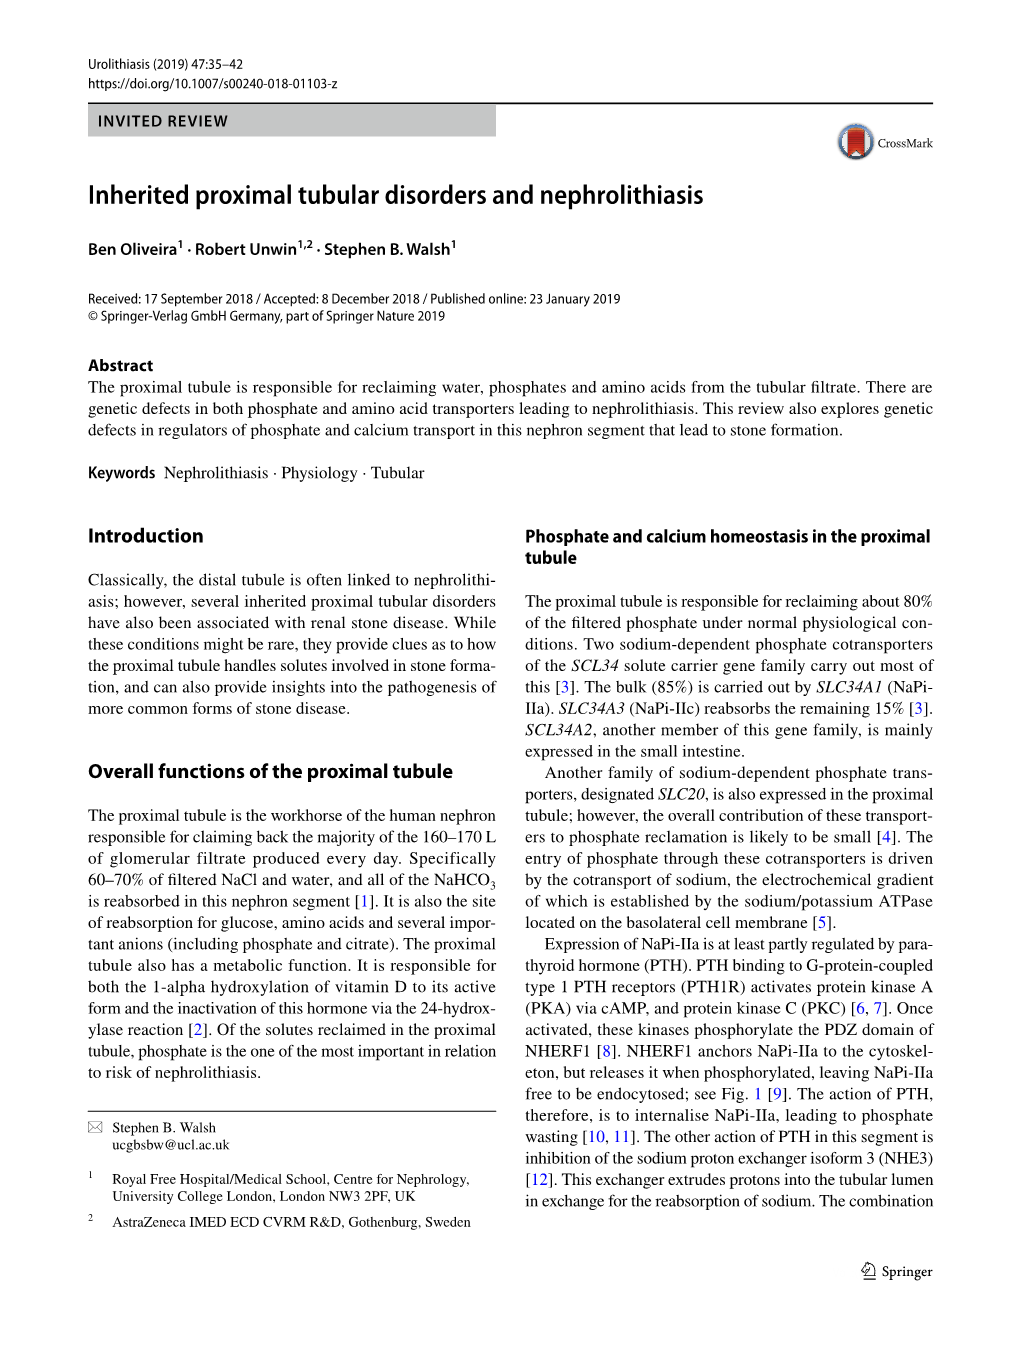 Inherited Proximal Tubular Disorders and Nephrolithiasis